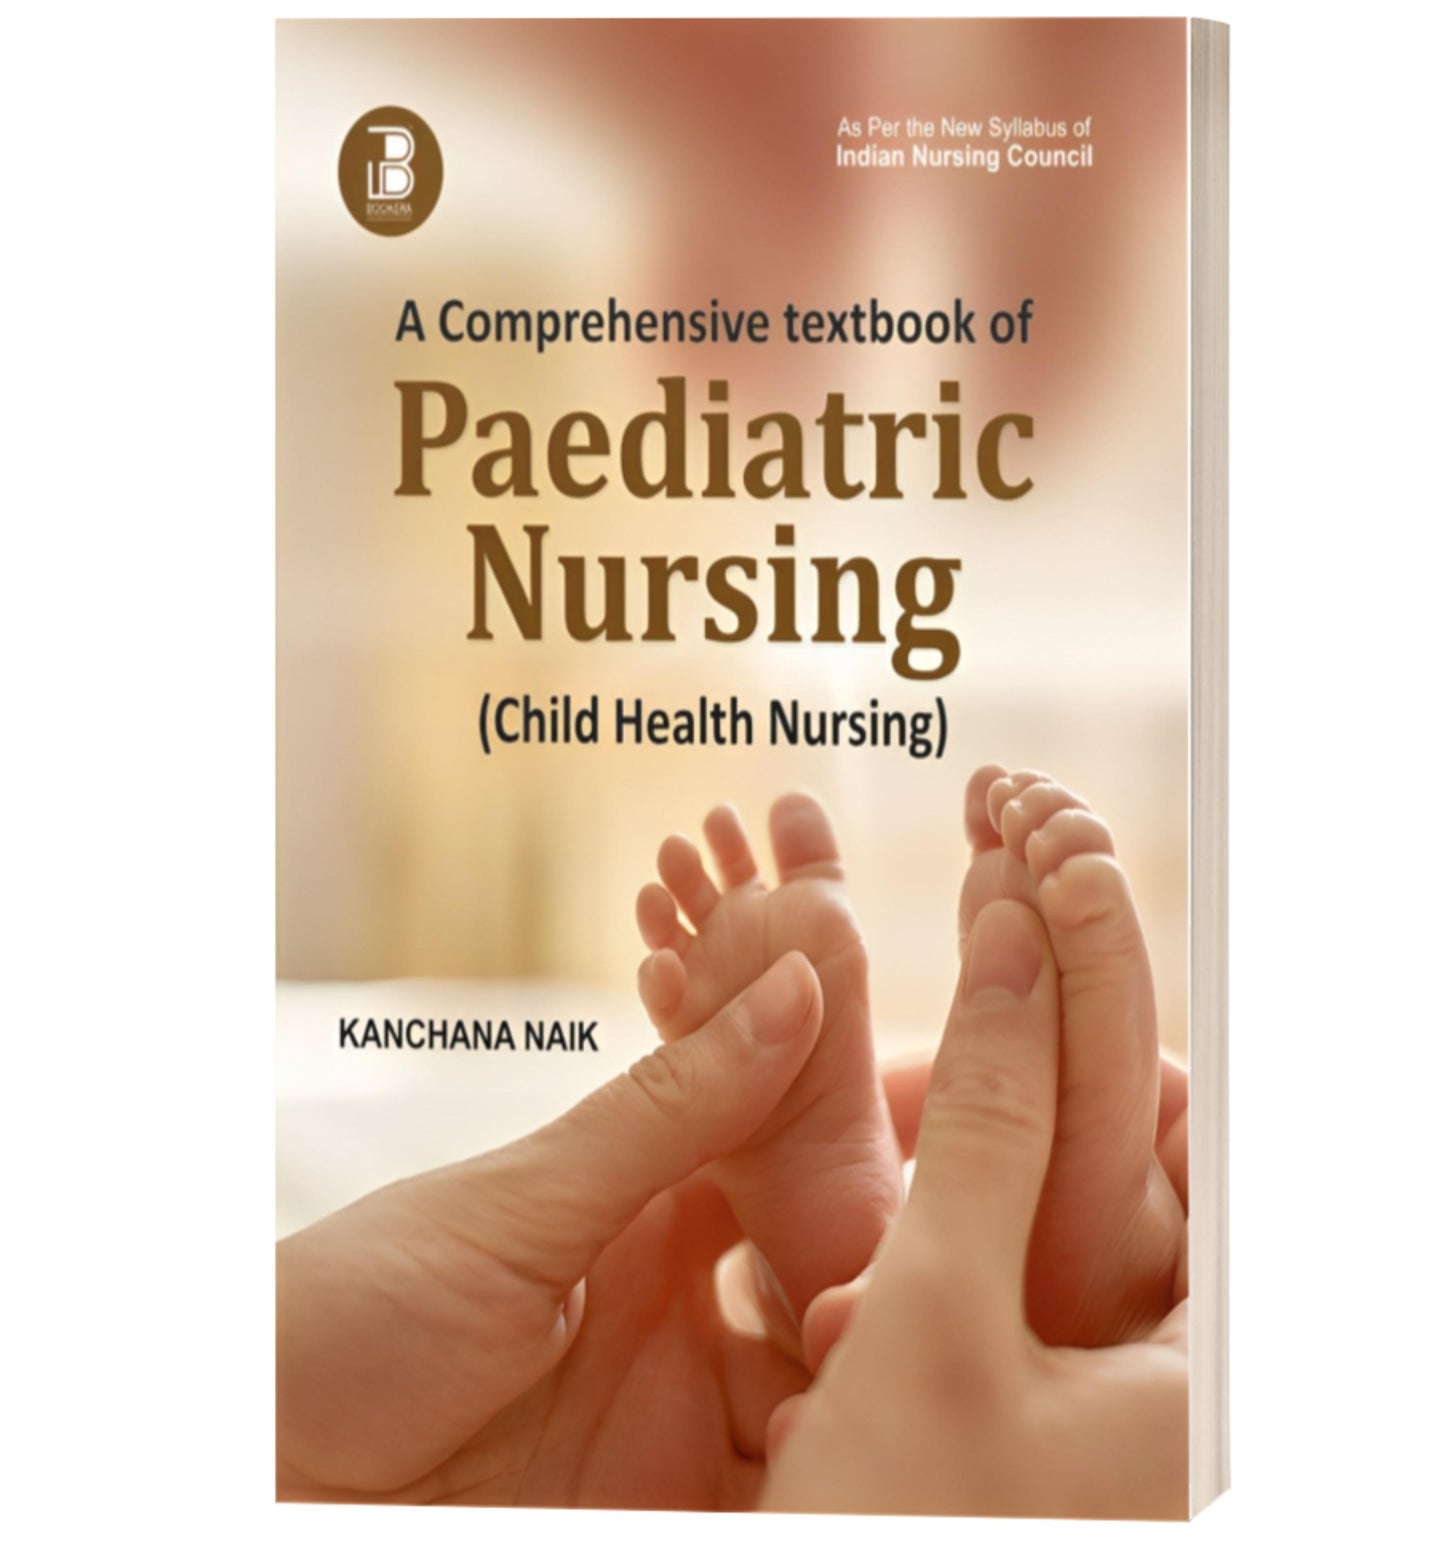 A Comprehensive textbook of Paediatric Nursing